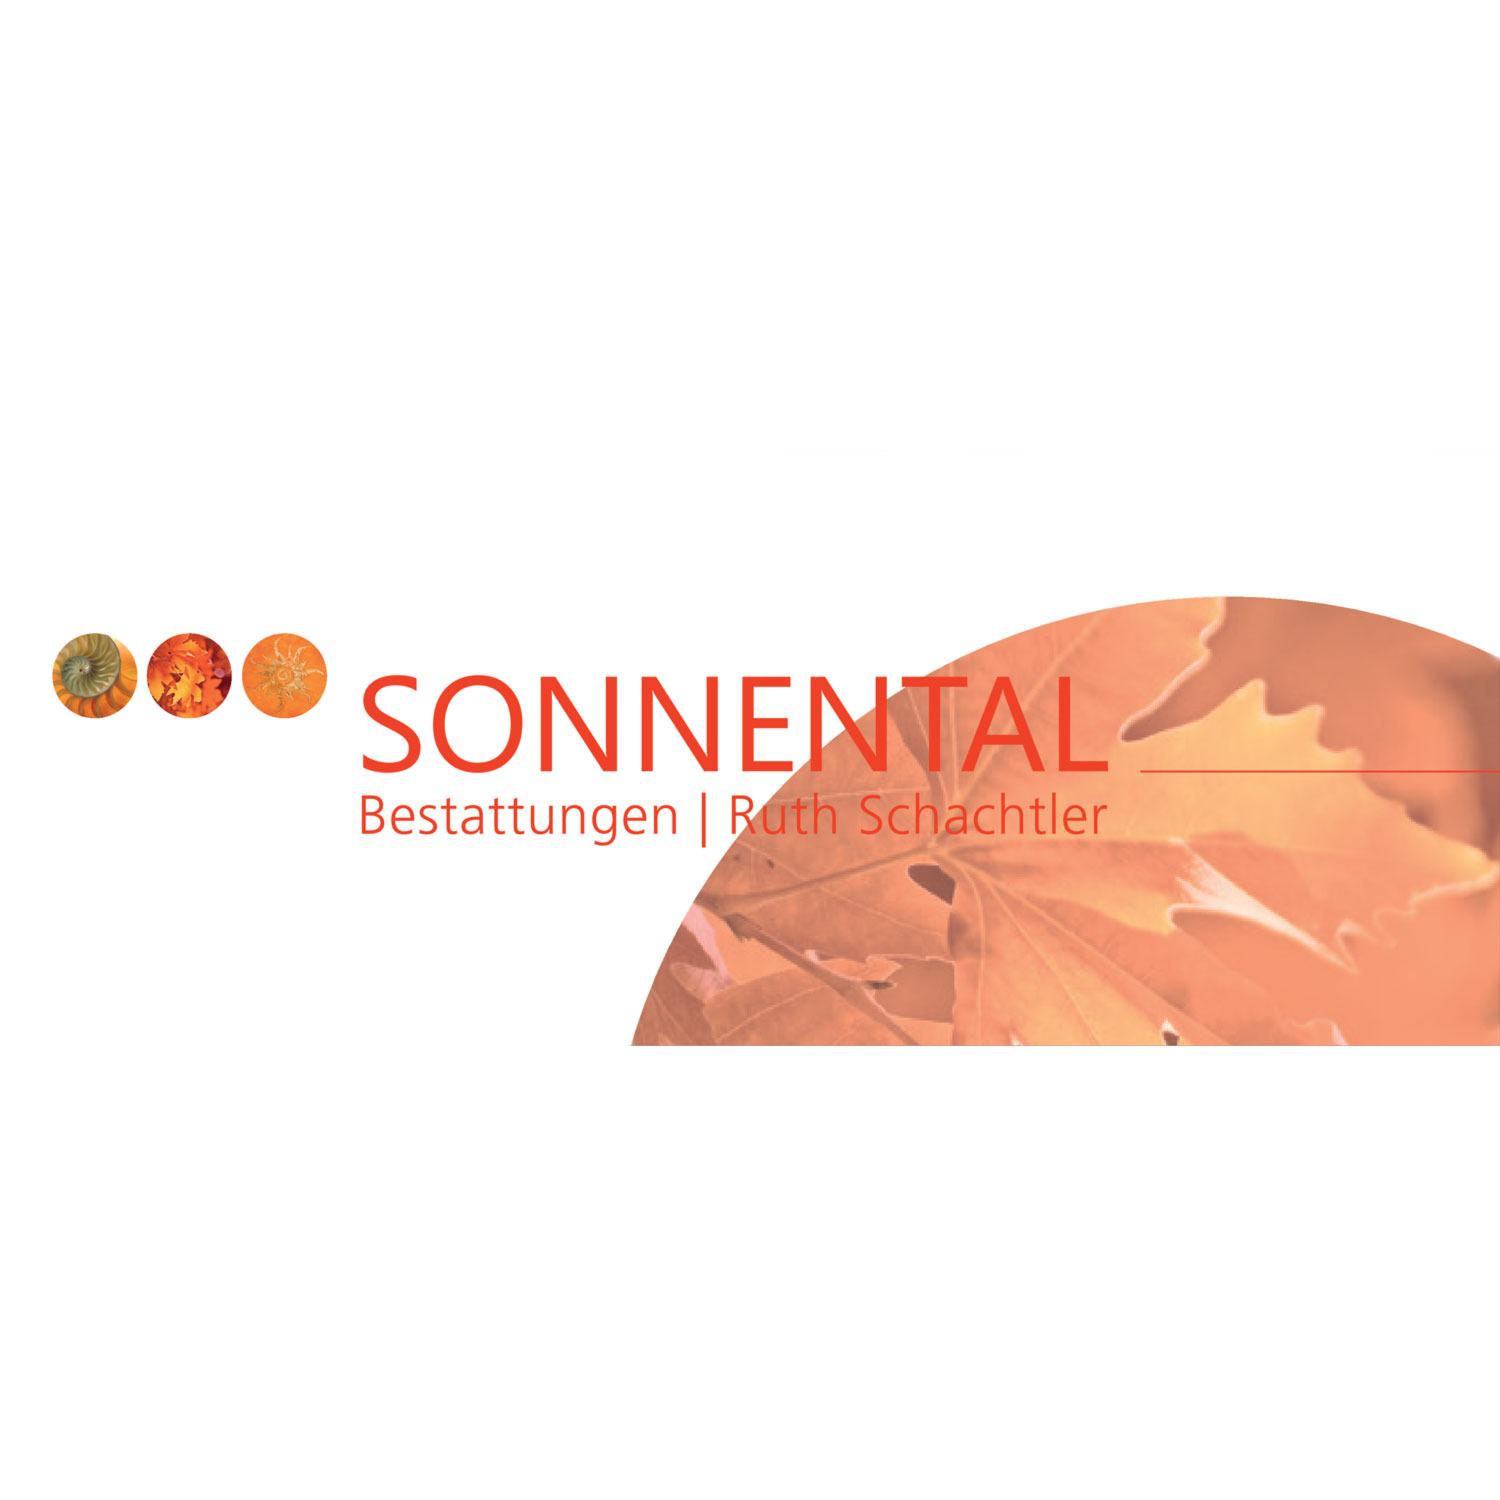 Bestattungen Sonnental Ruth Schachtler GmbH Logo